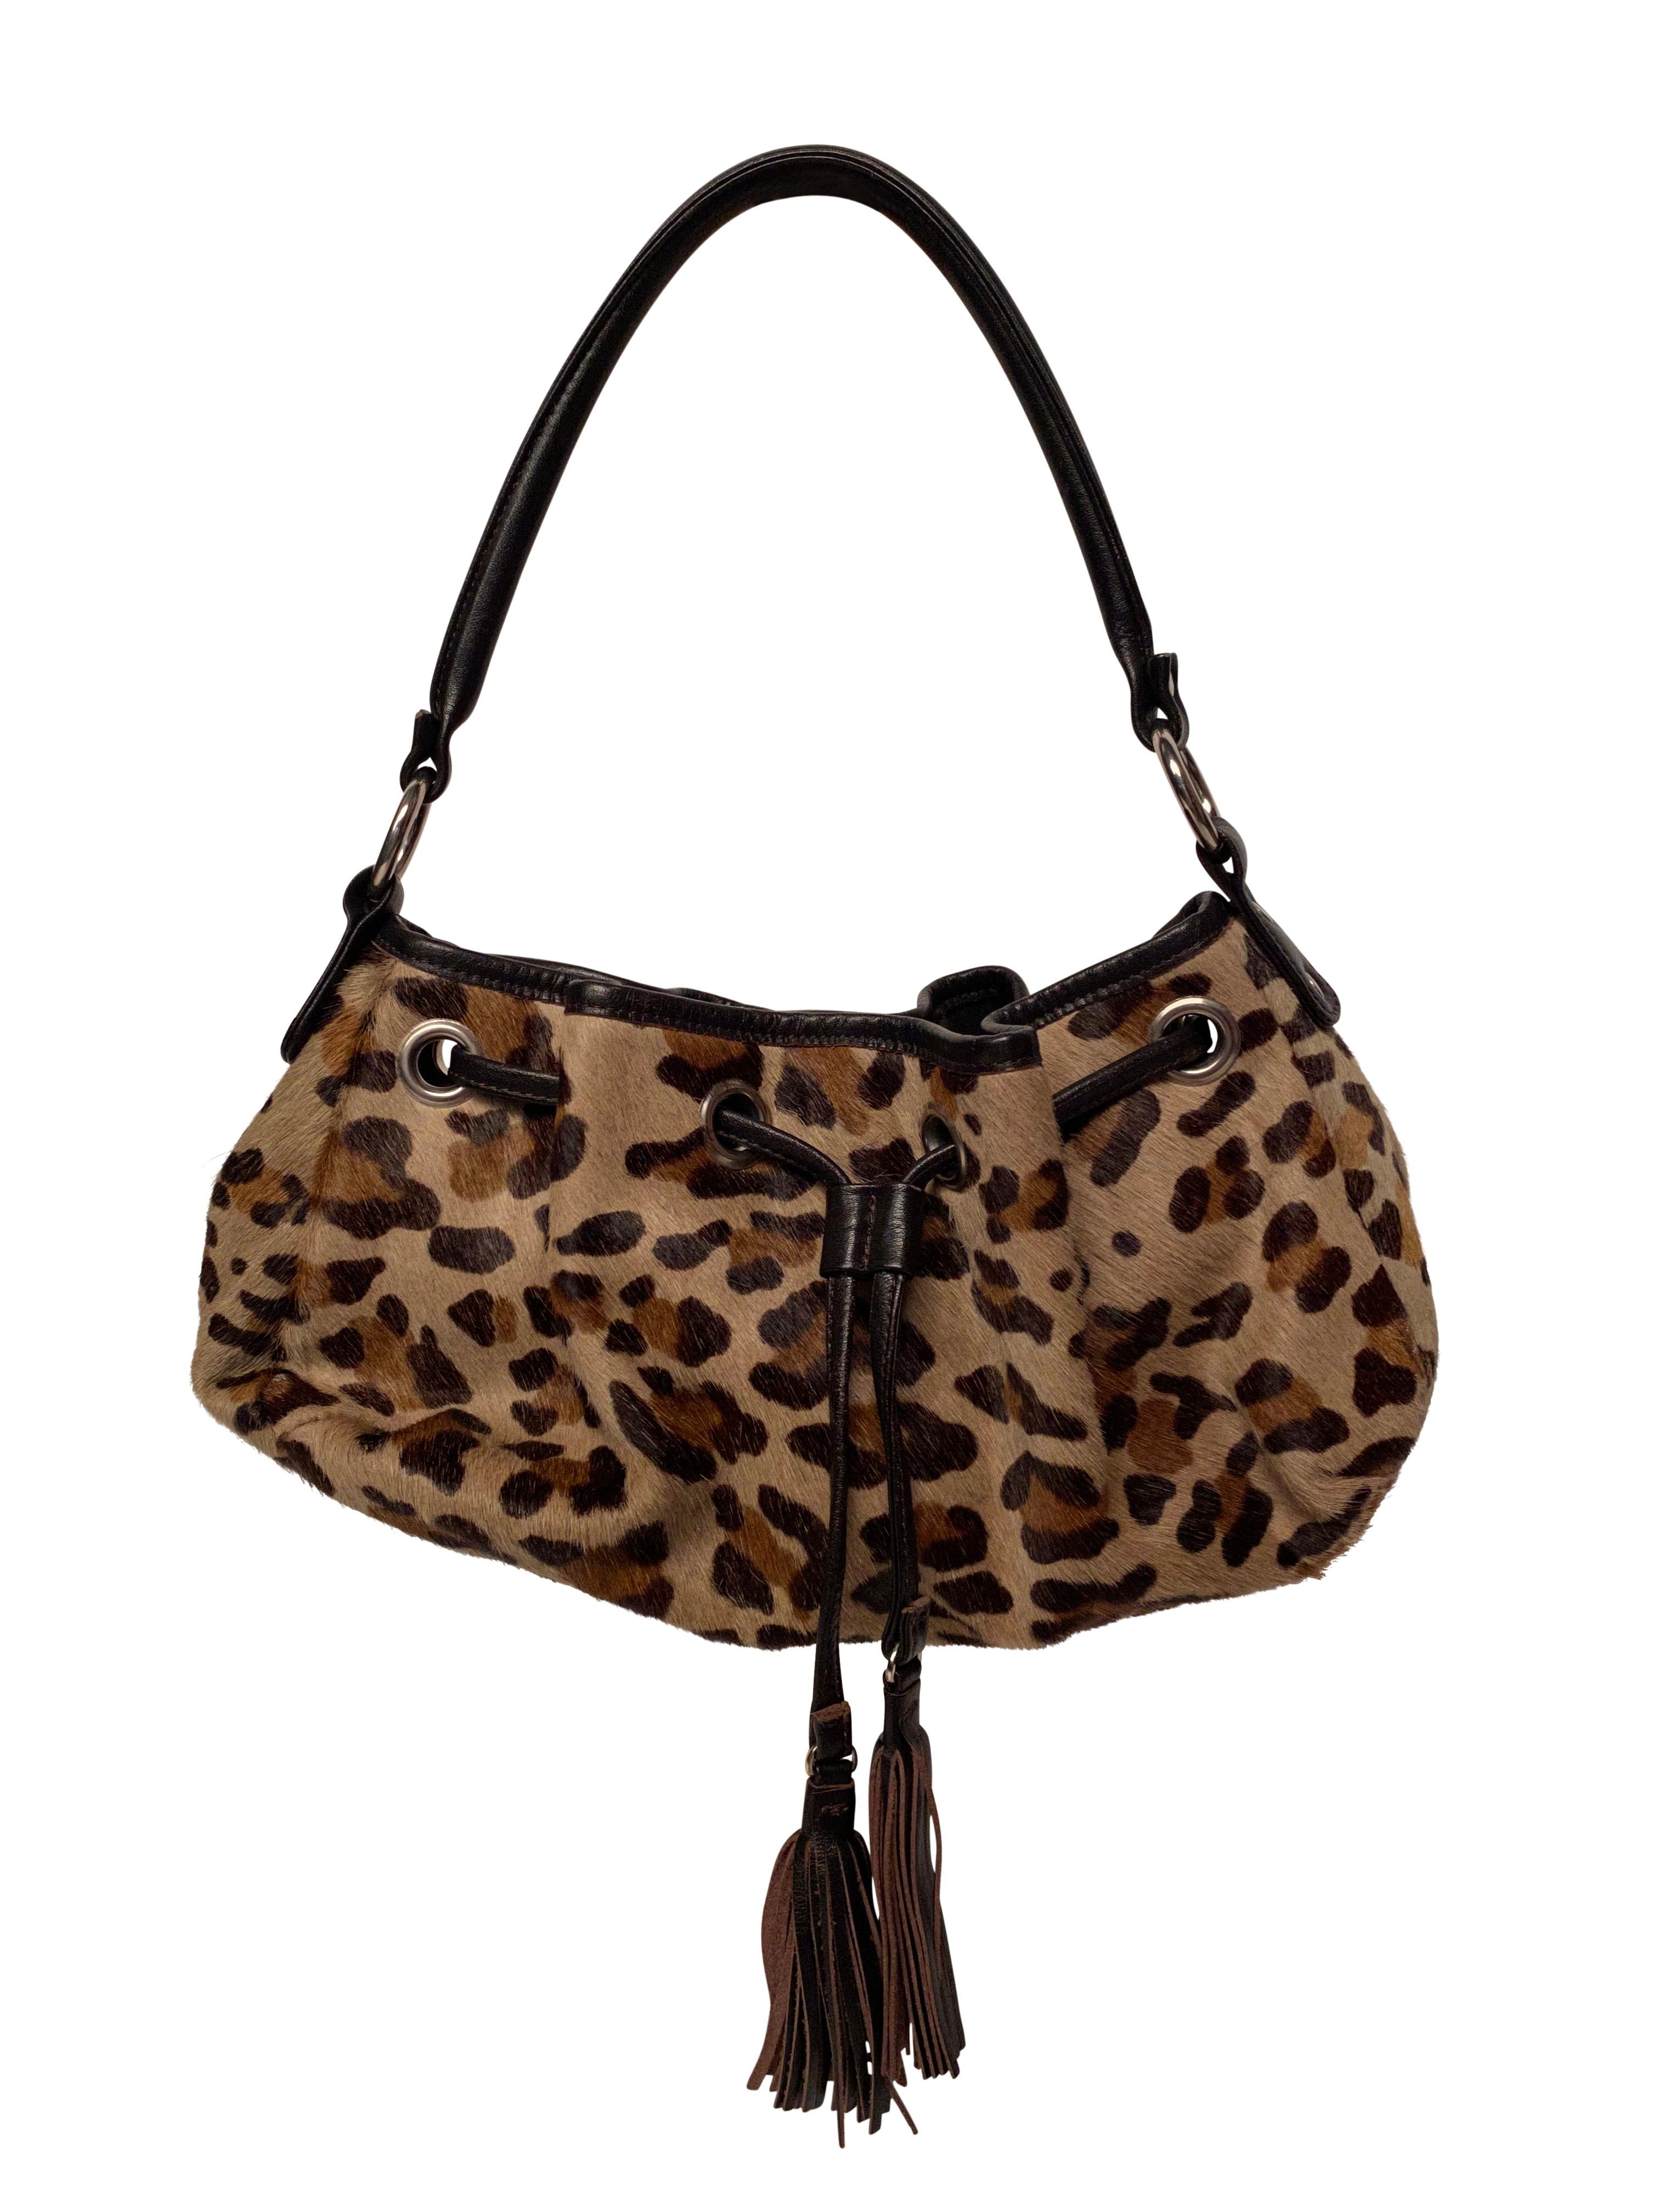 Vintage Barneys New York leopard printed pony hair handbag with fabric interior. 